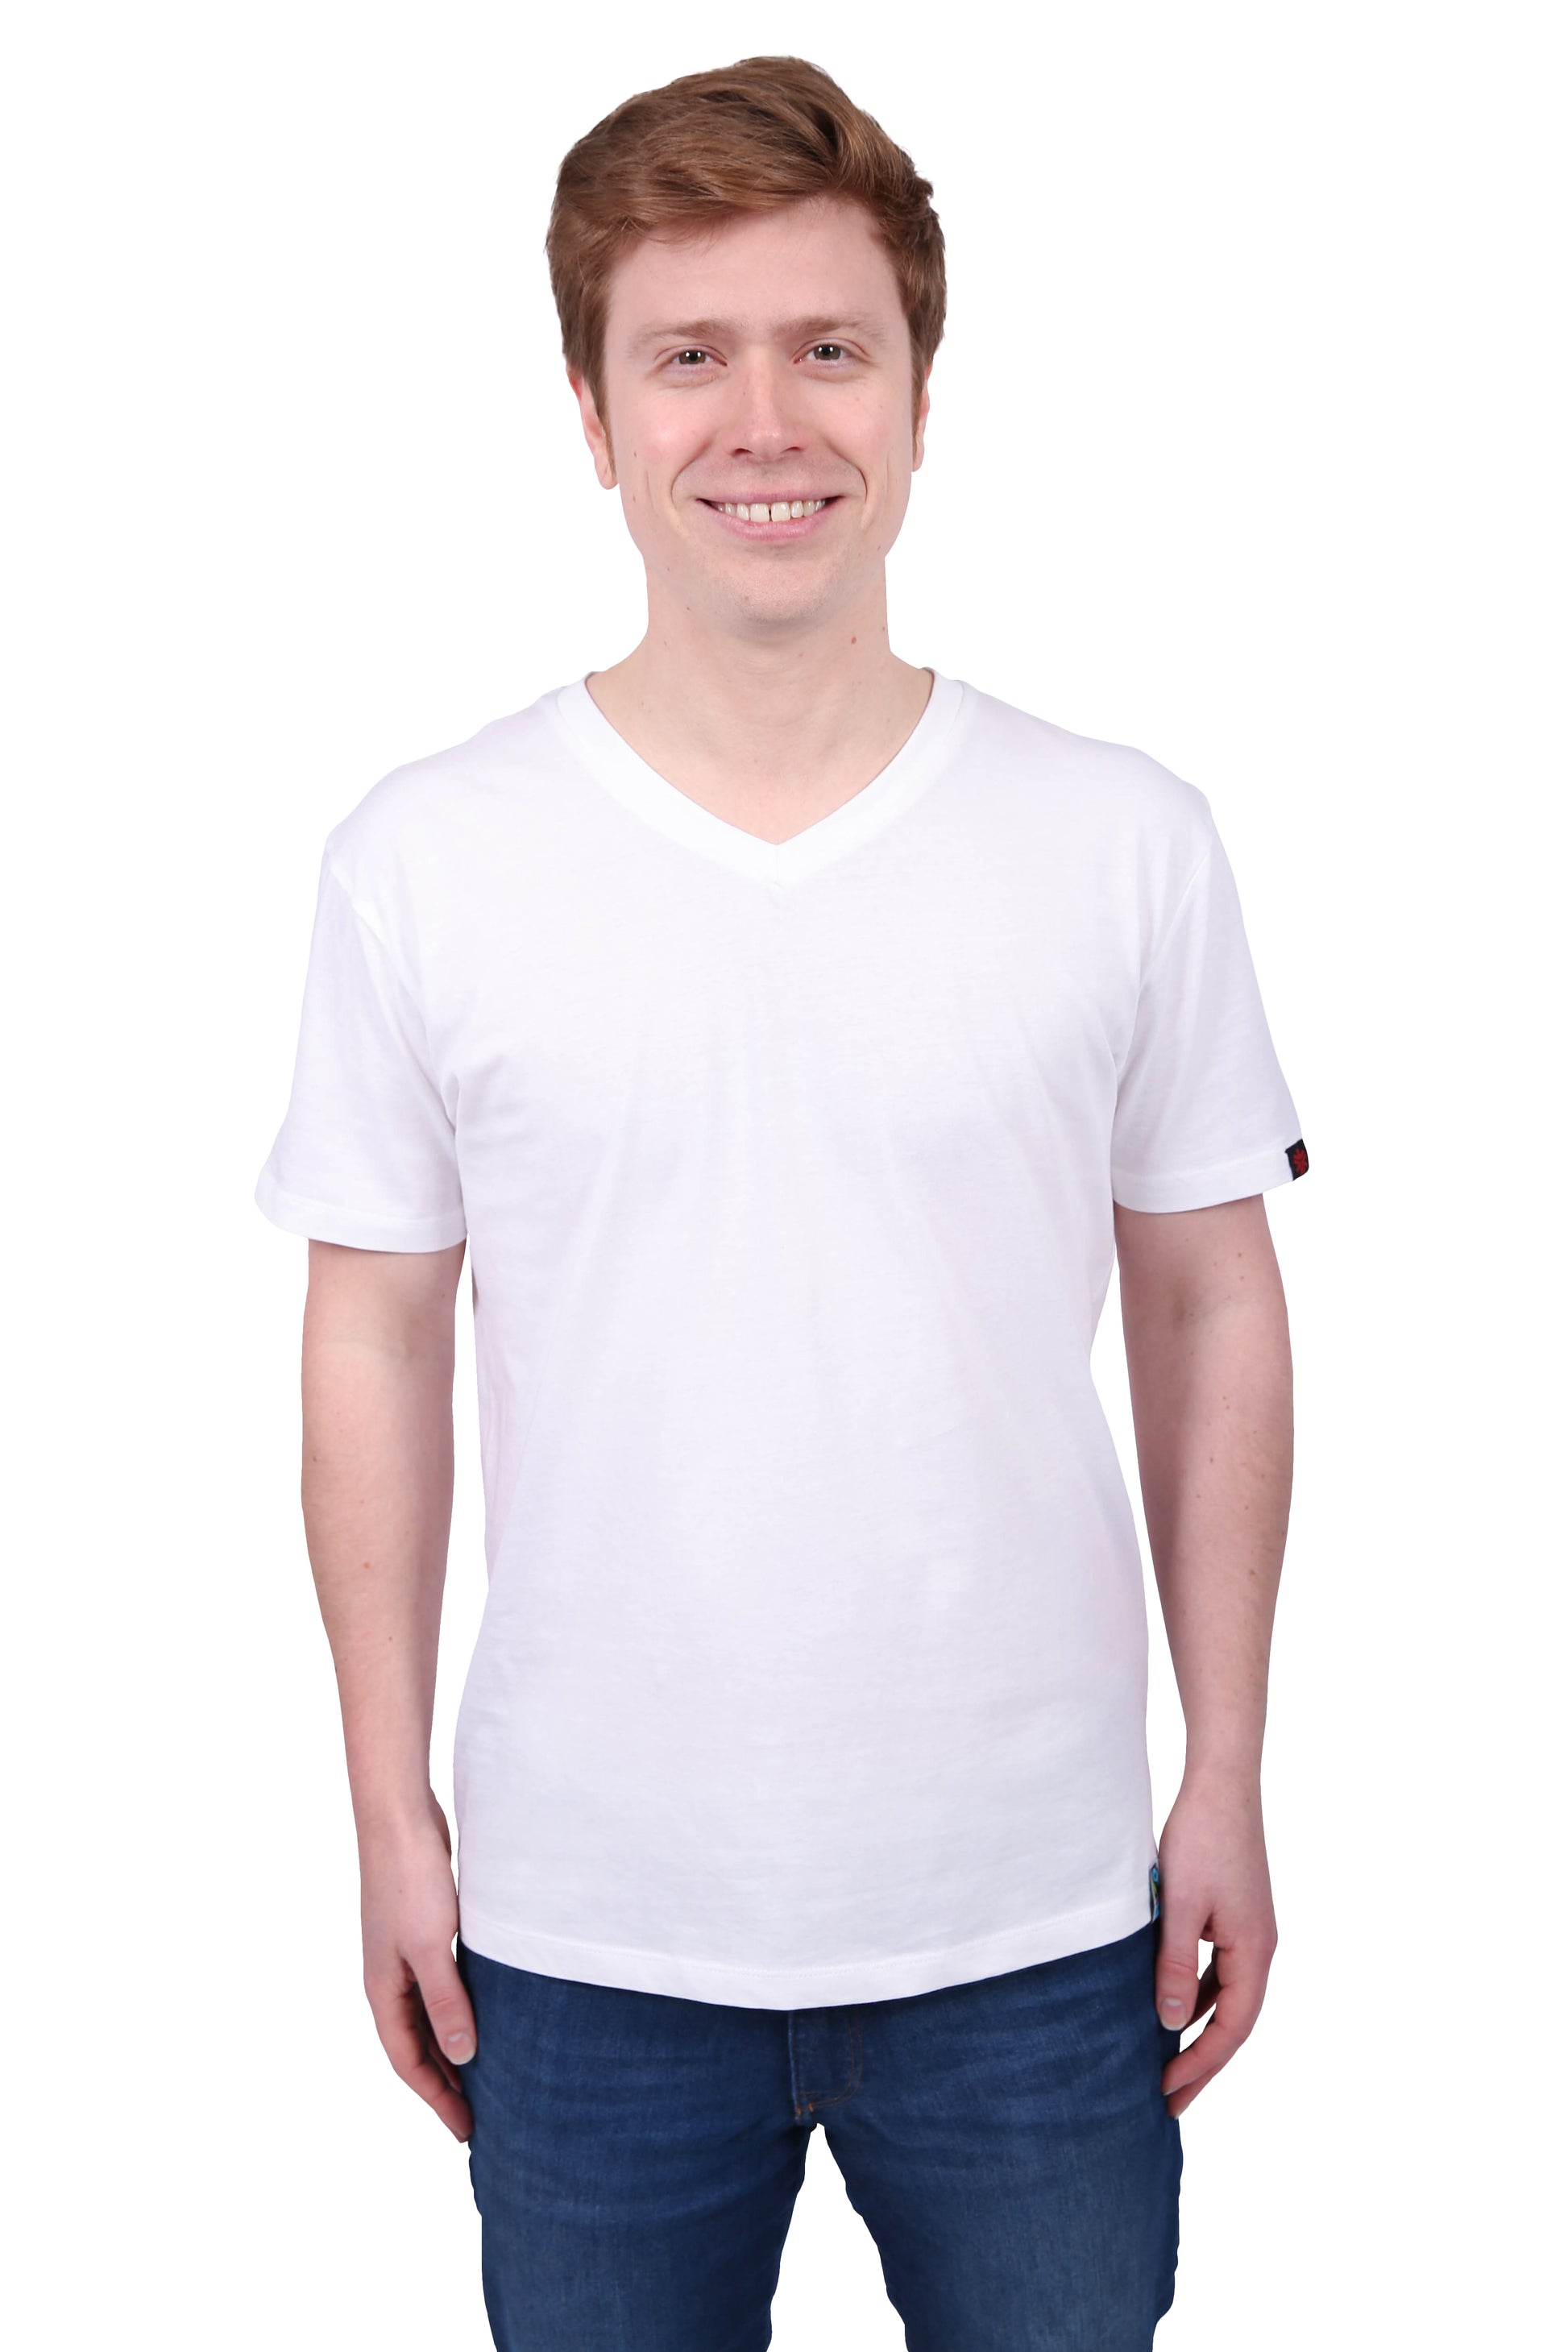 Etiko Fairtrade Certified Organic Cotton White Unisex V-Neck T-Shirt, Ethically-made, Eco-Friendly